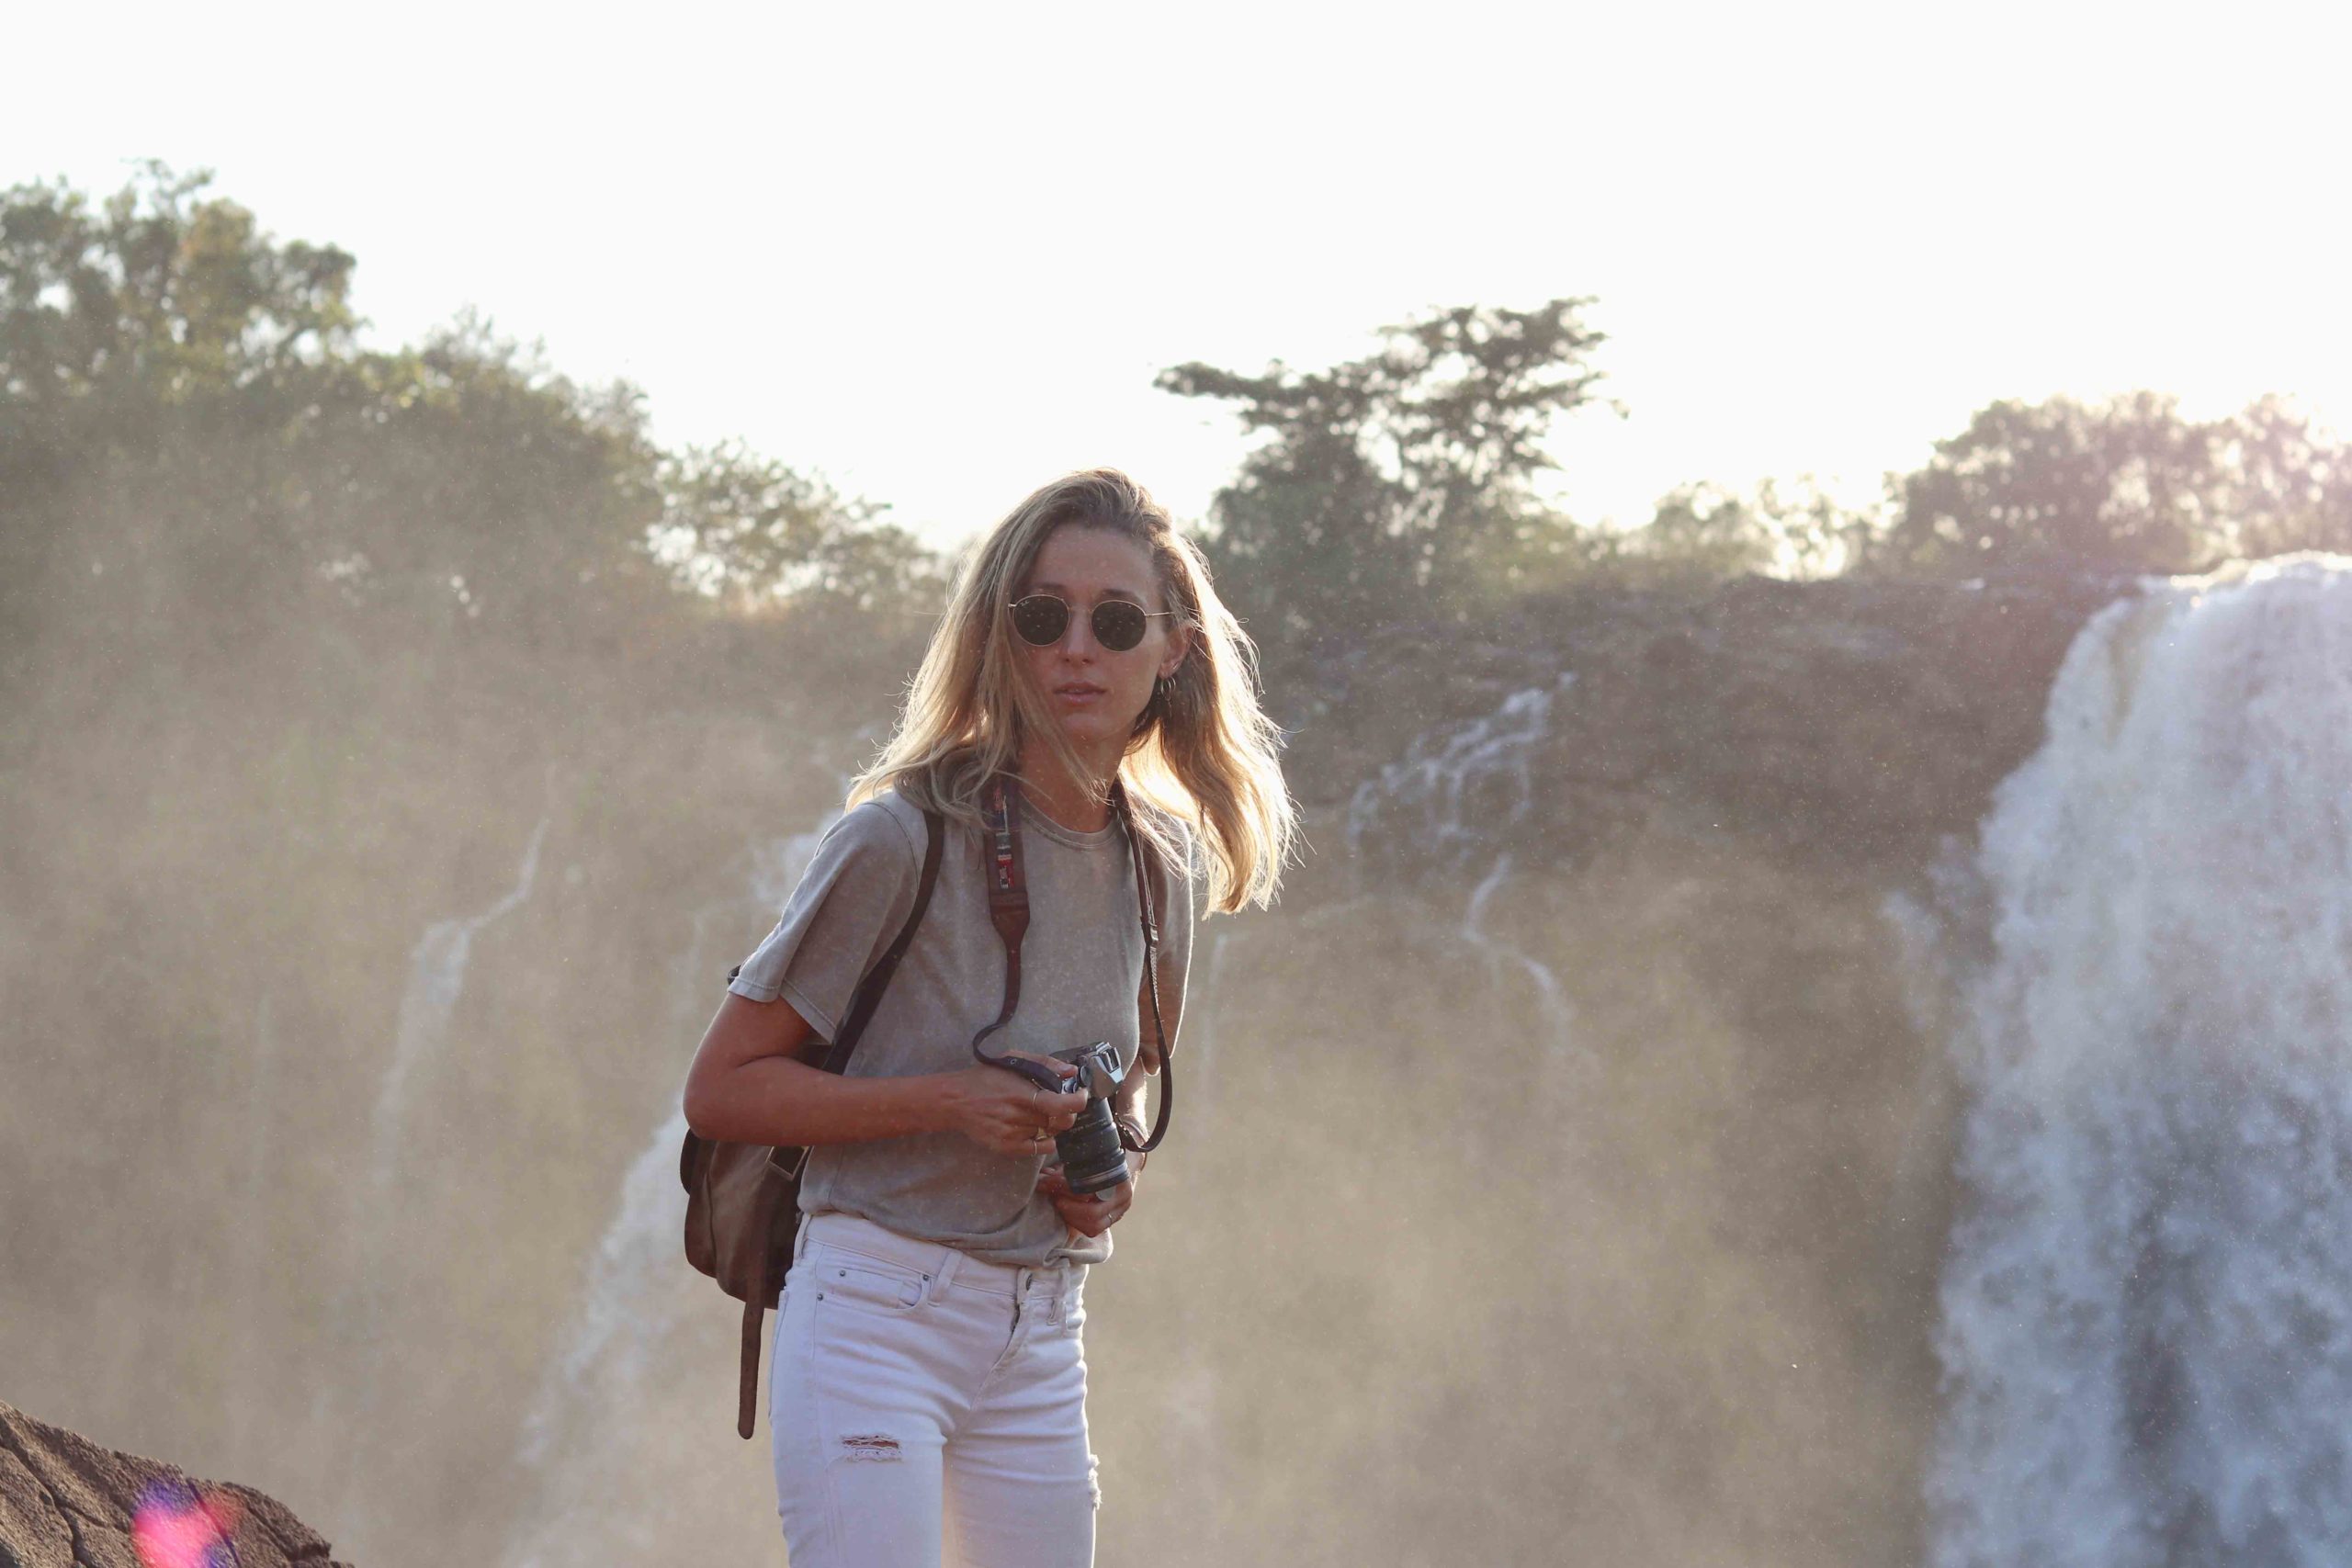 Nina Karnikowski at work Ethiopia waterfall by Peter Windrim